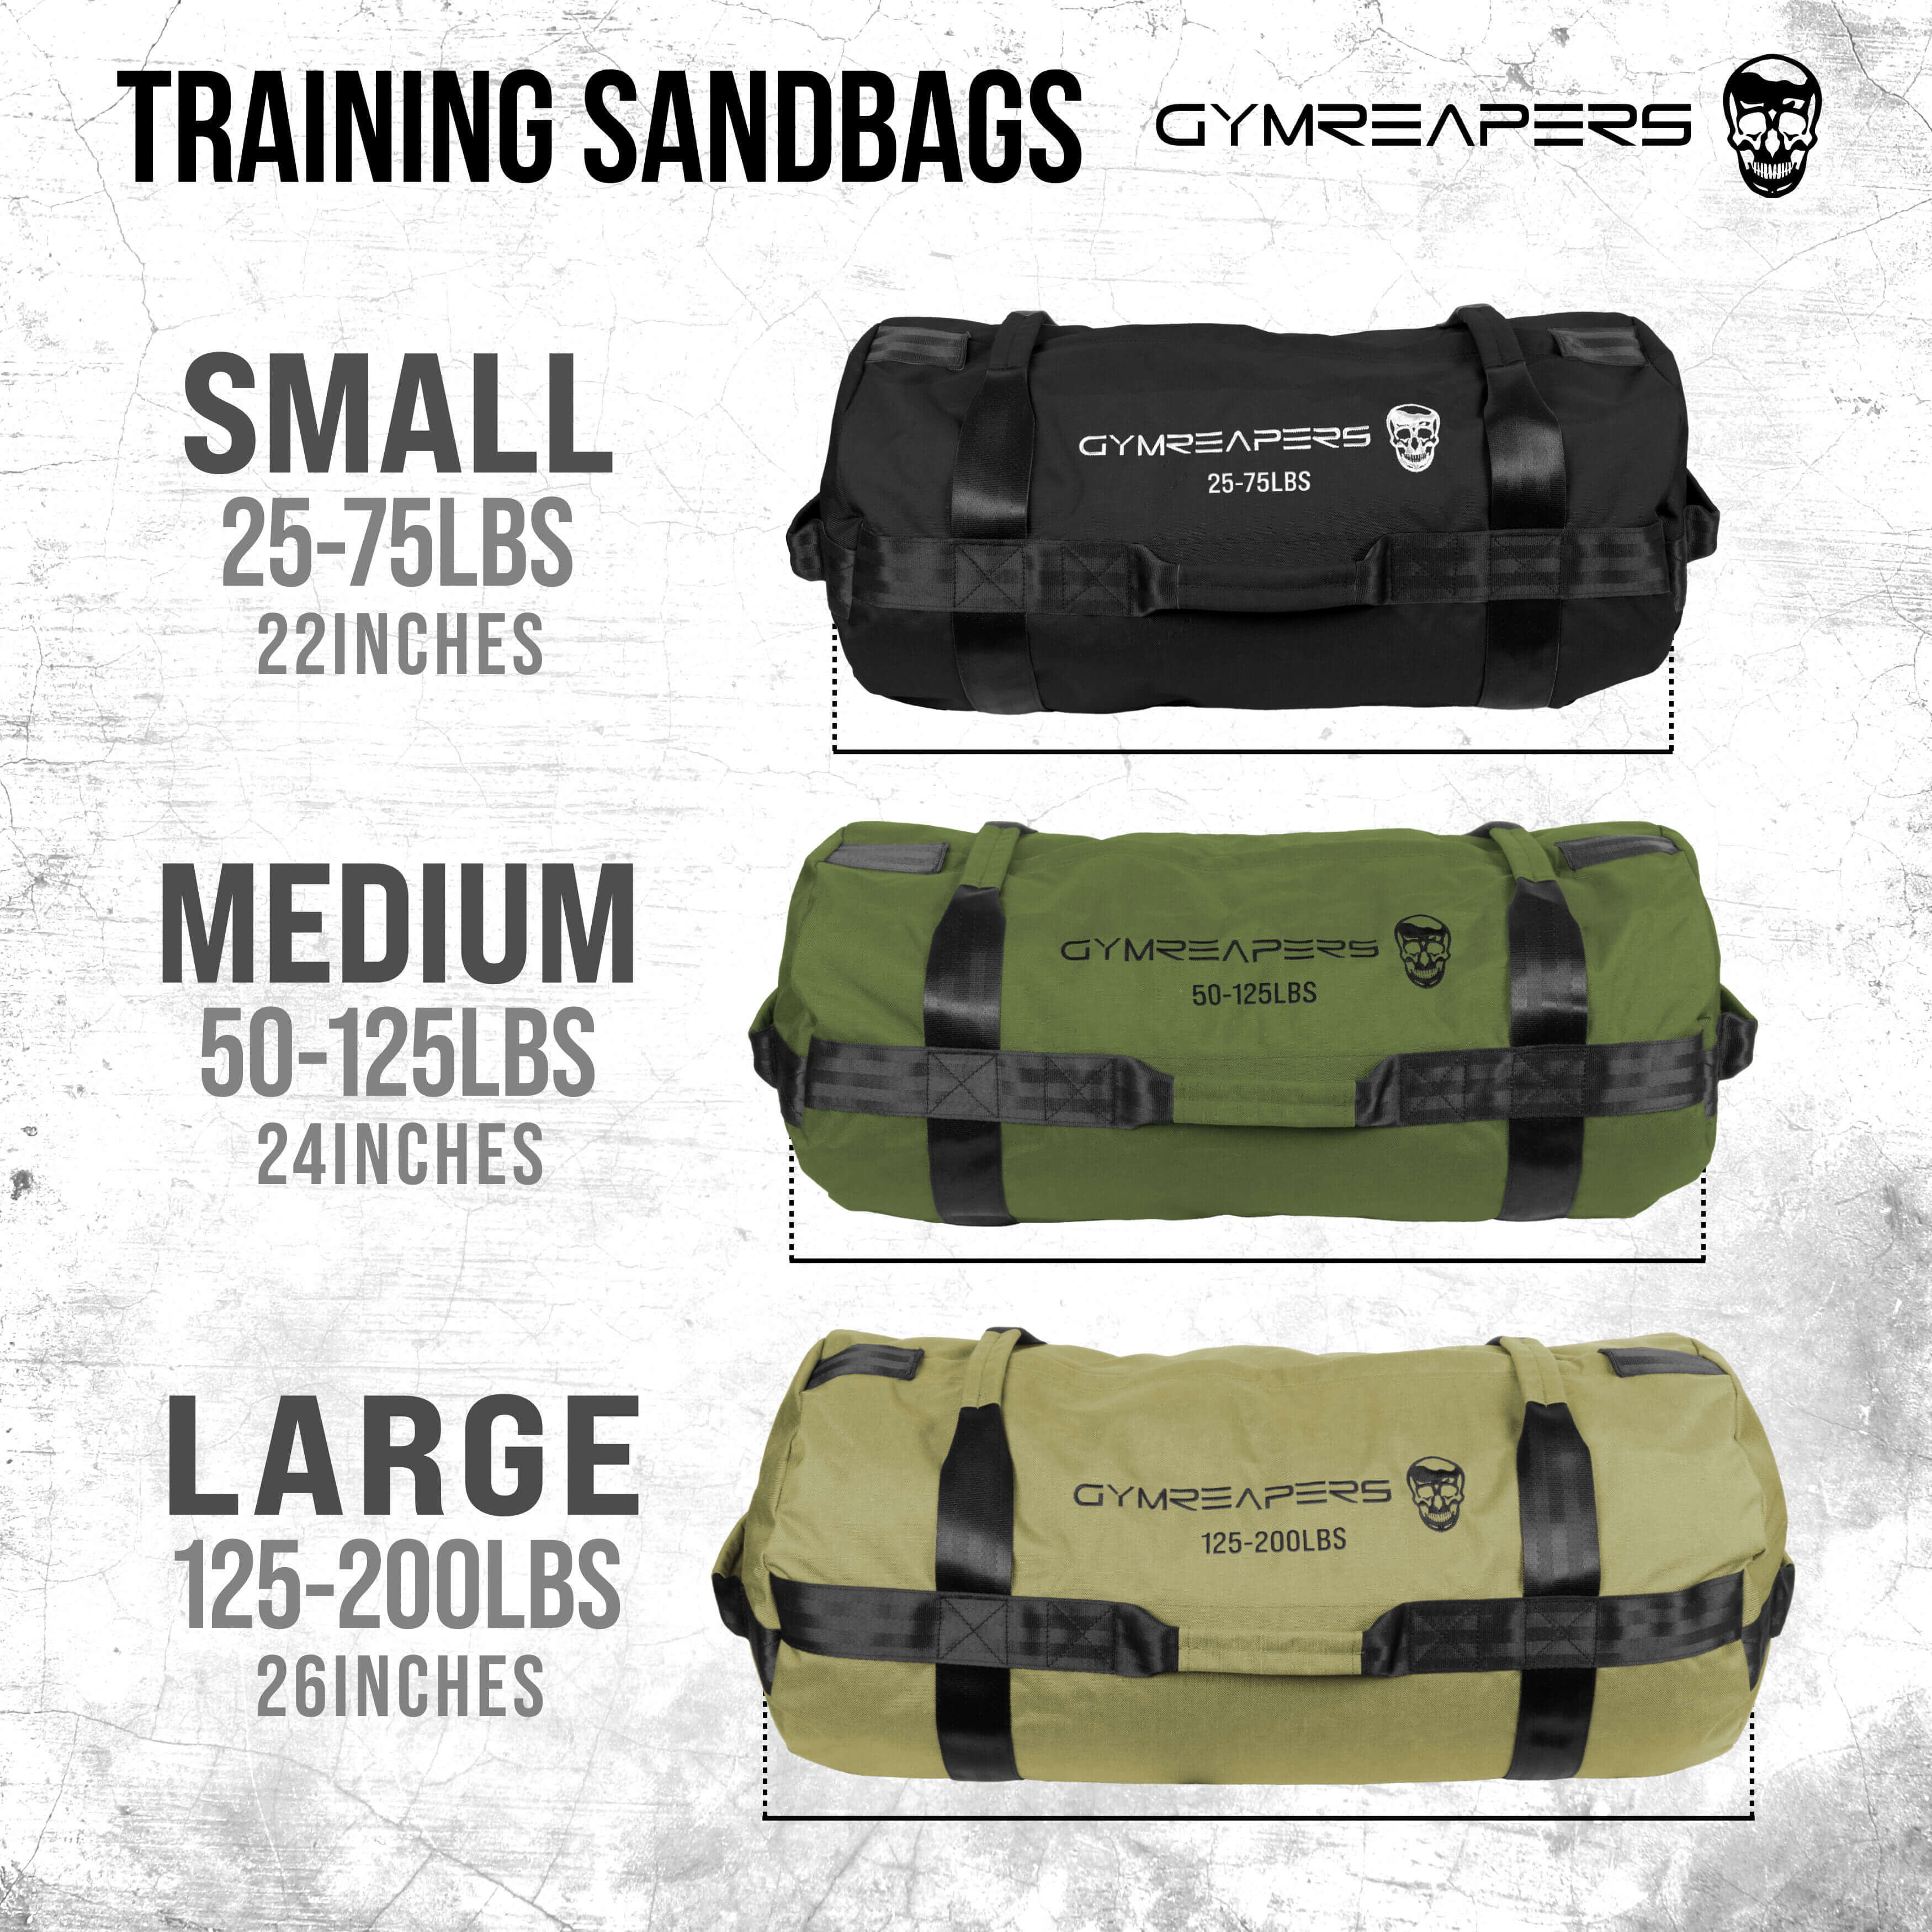 training sandbag sizes and dimensions